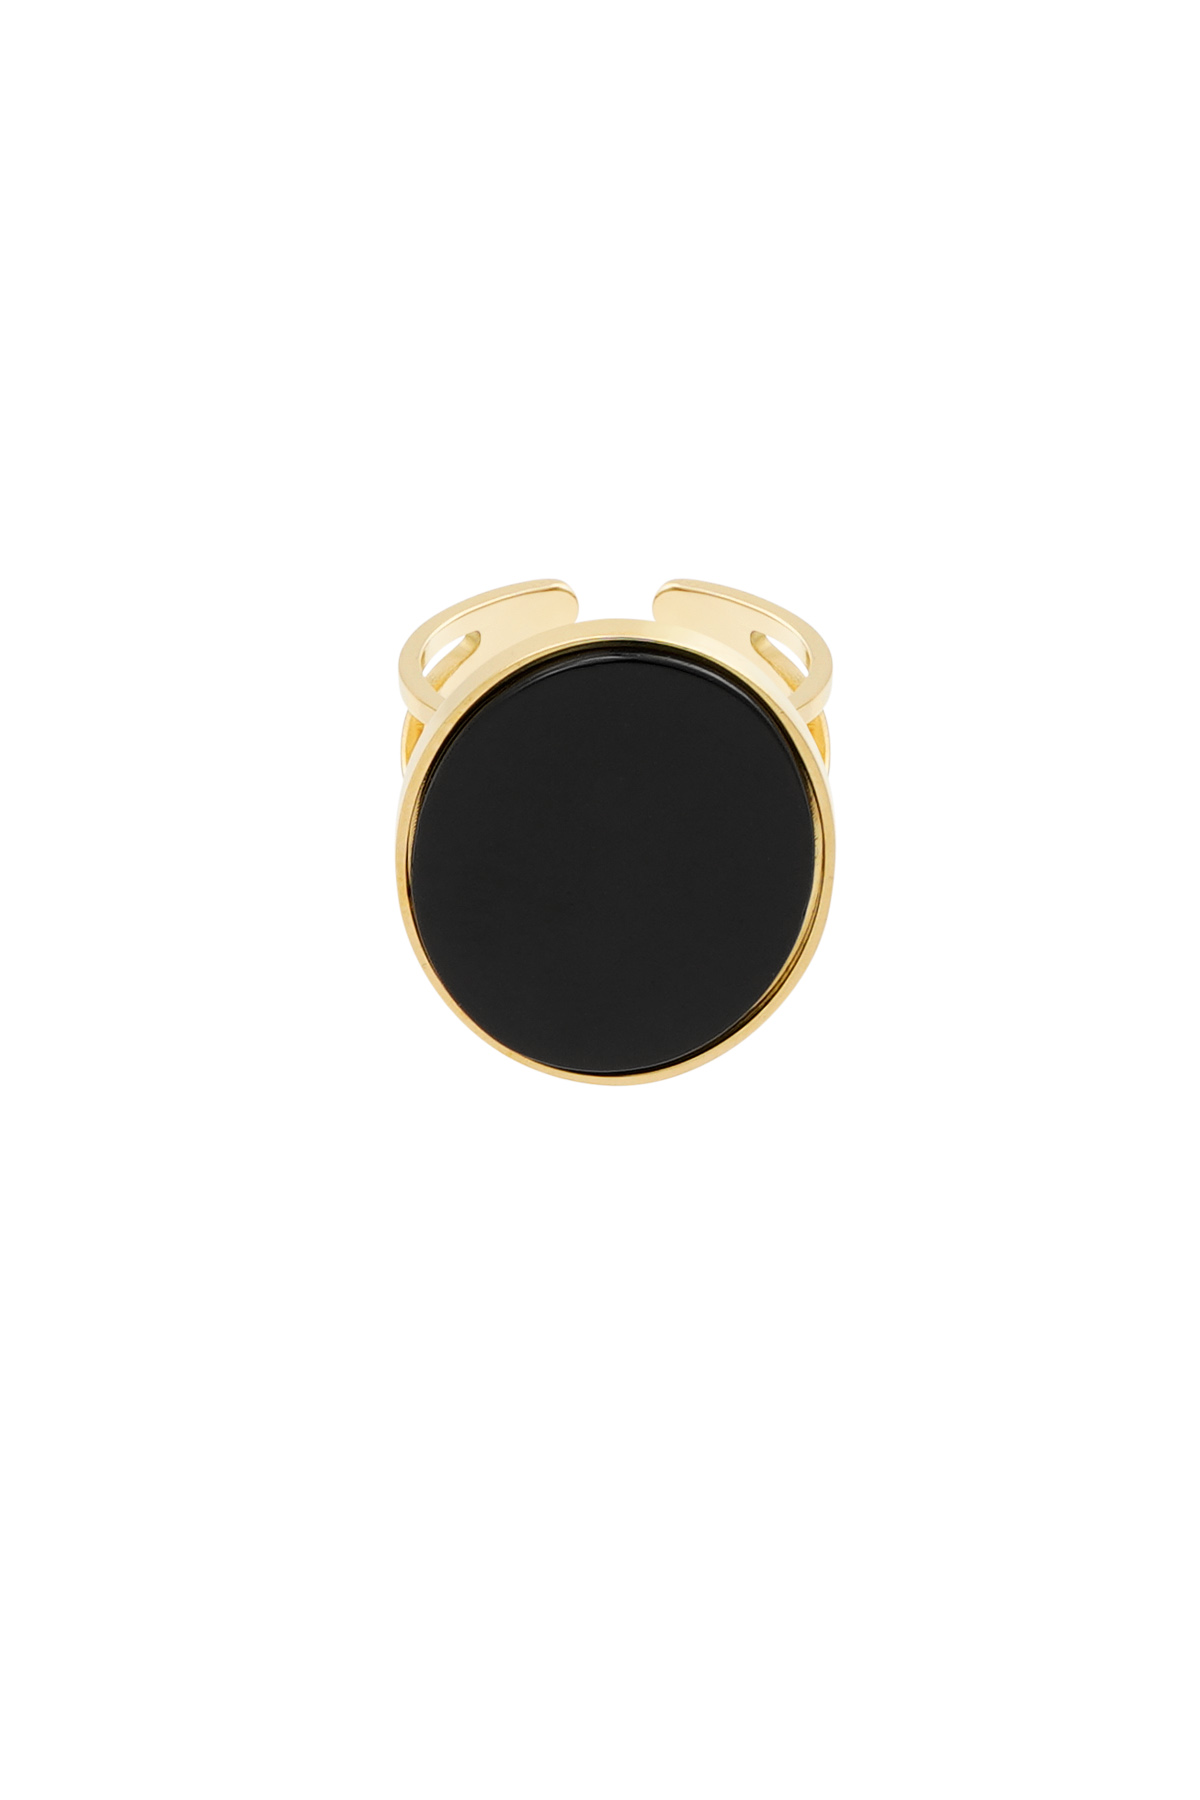 Ring large stone - gold/black 